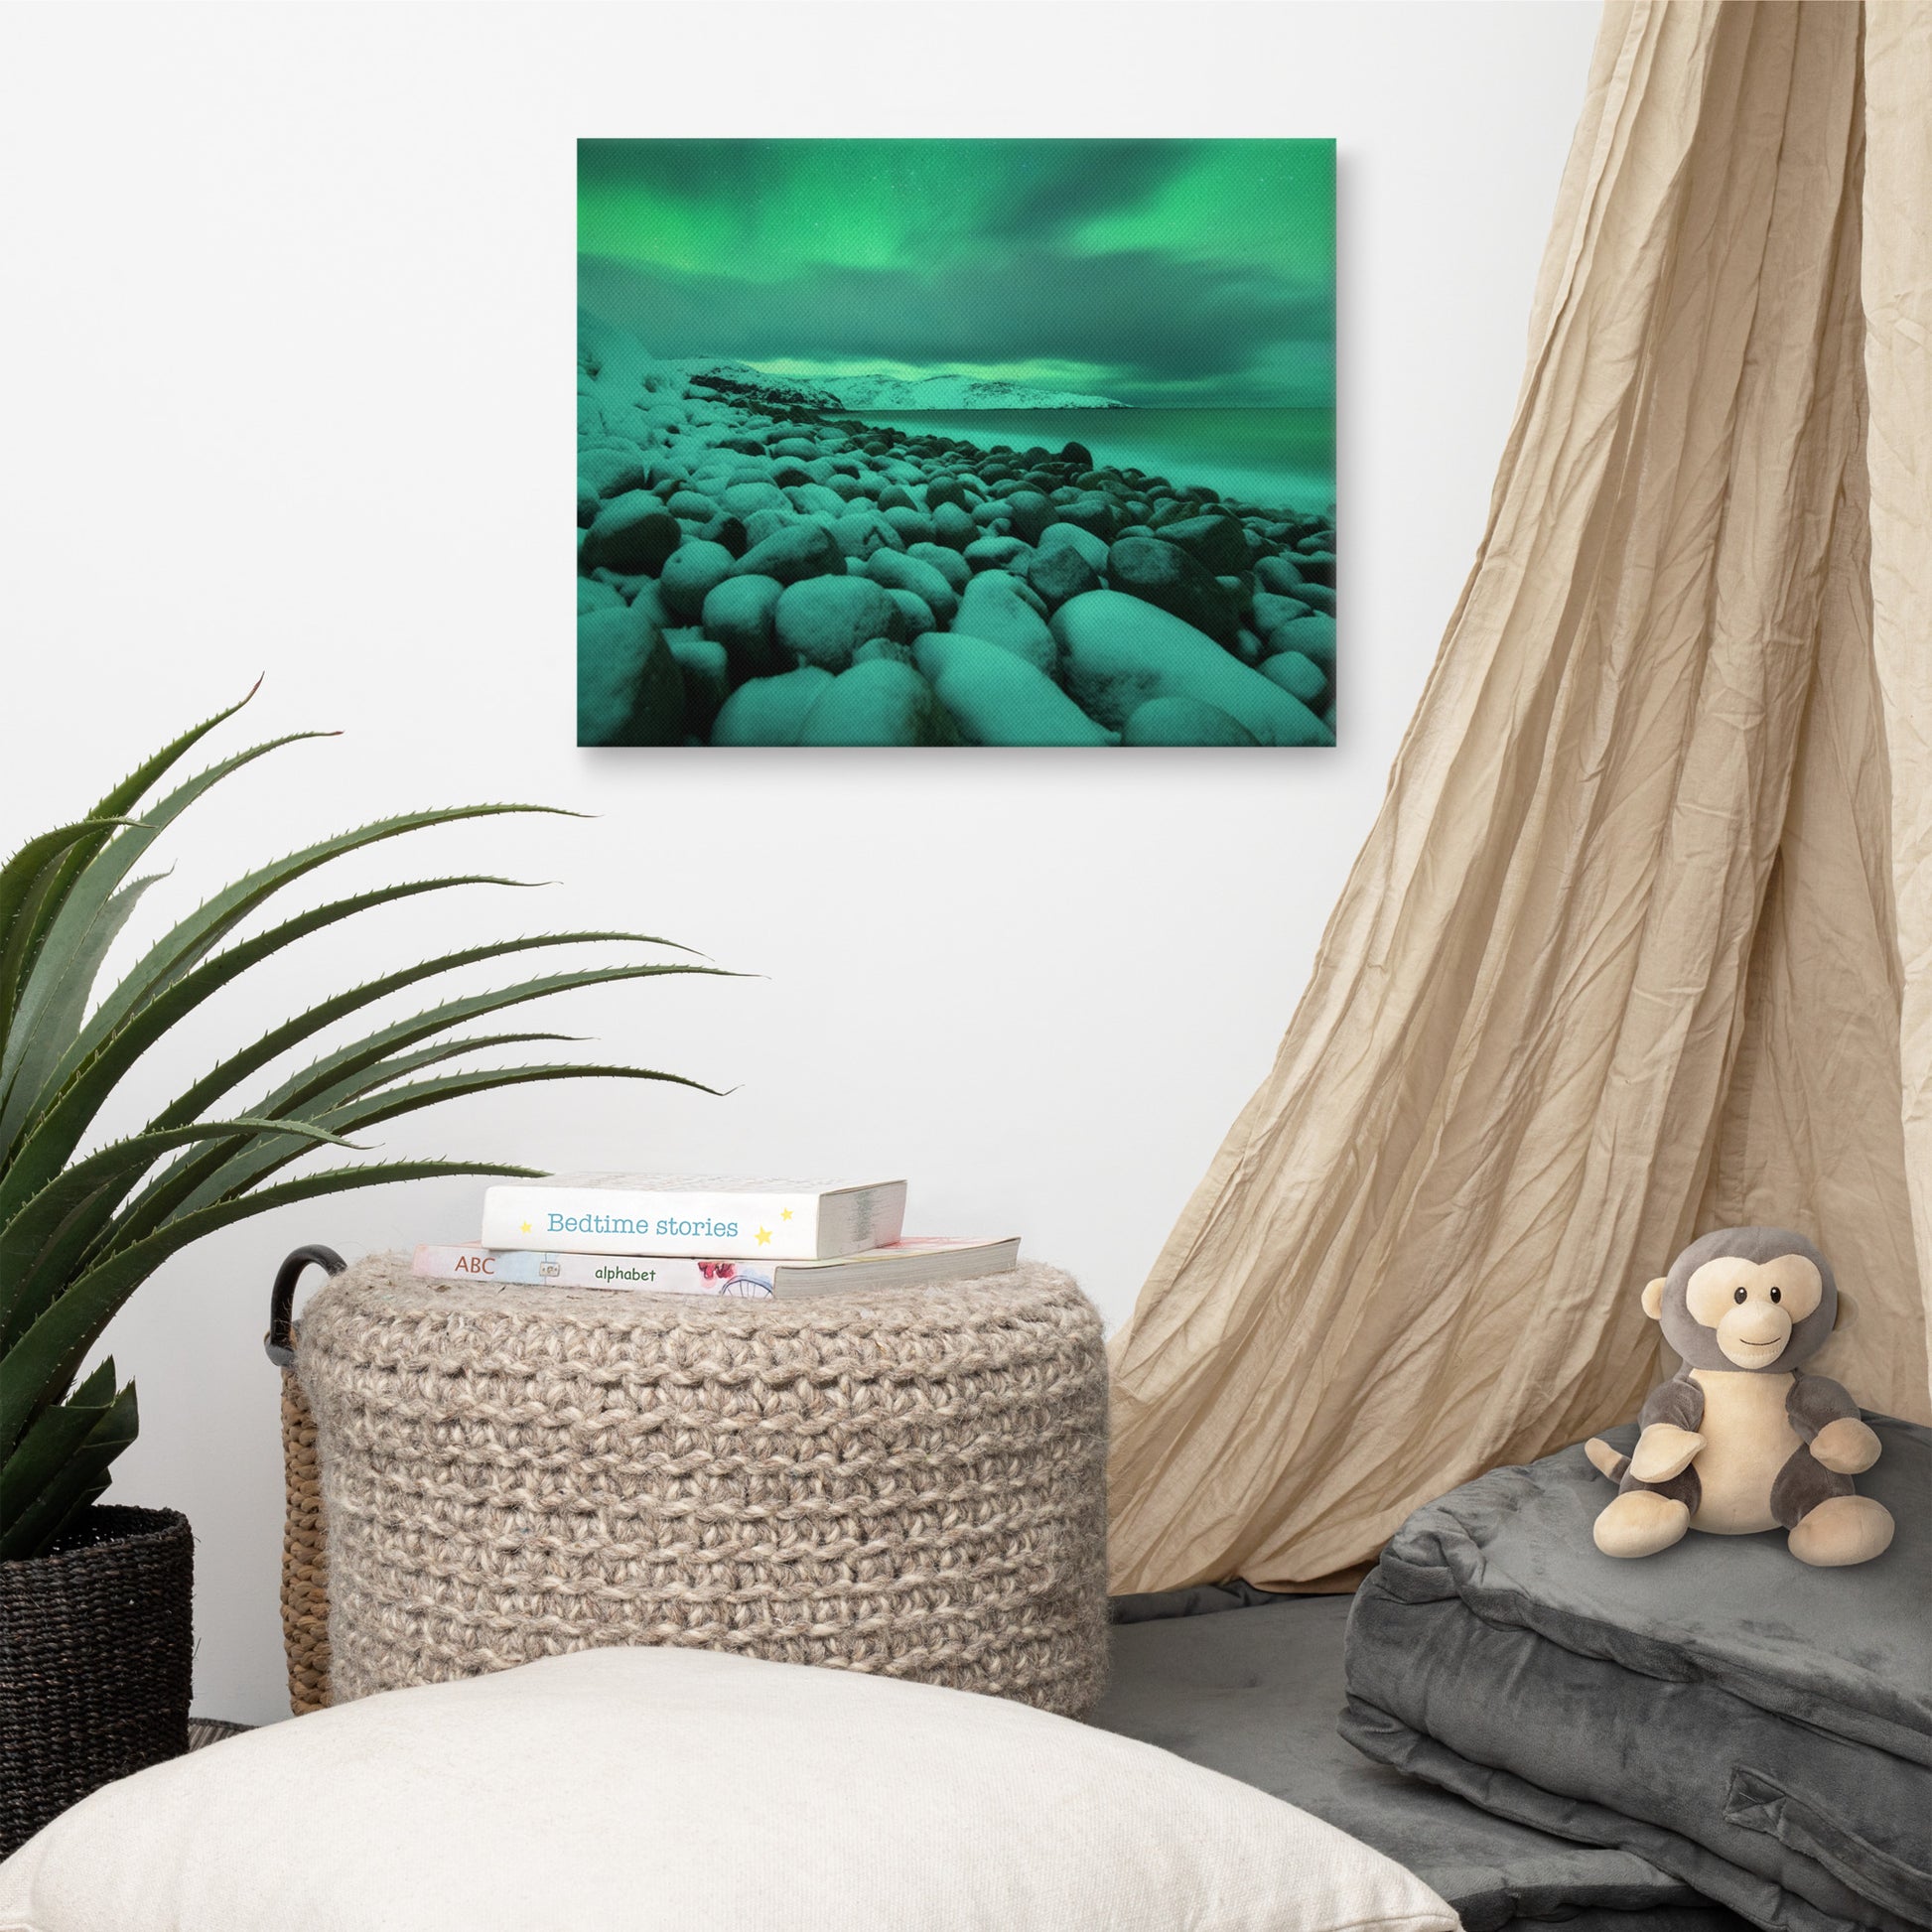 Laundry Room Wall Pictures: Aurora Borealis Over Ocean in Teriberka Night Seascape Landscape Photo Canvas Wall Art Prints